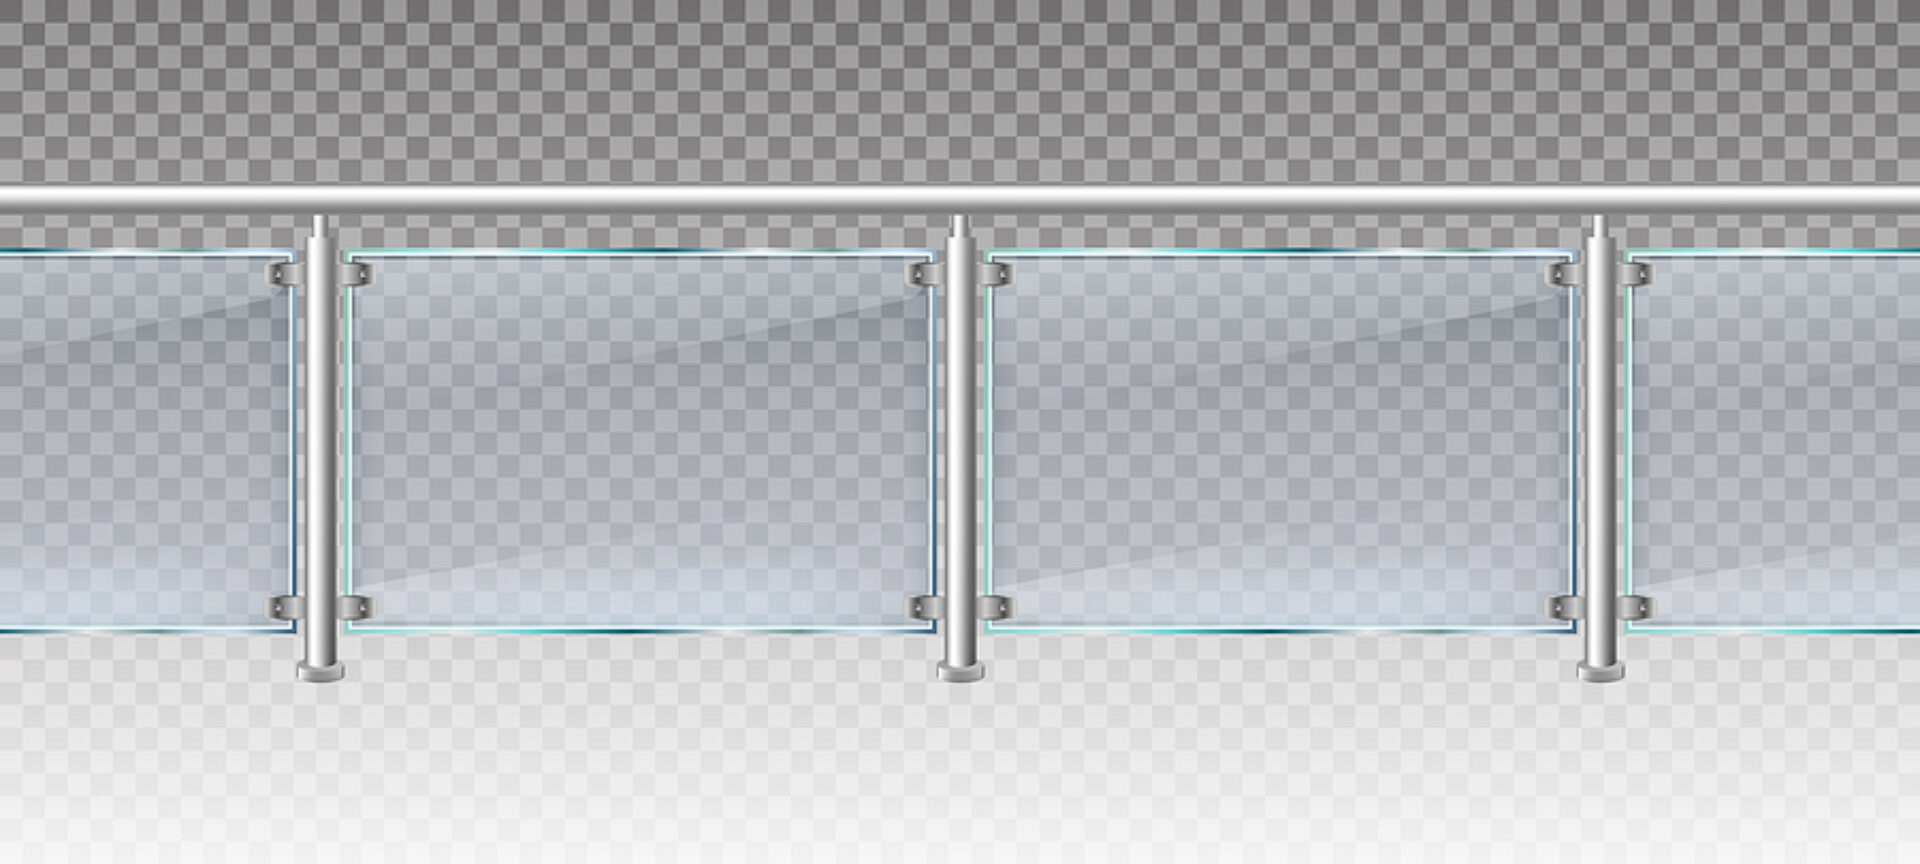 Realistic Glass Fence. Glass Balustrade With Metal Railings, Bal